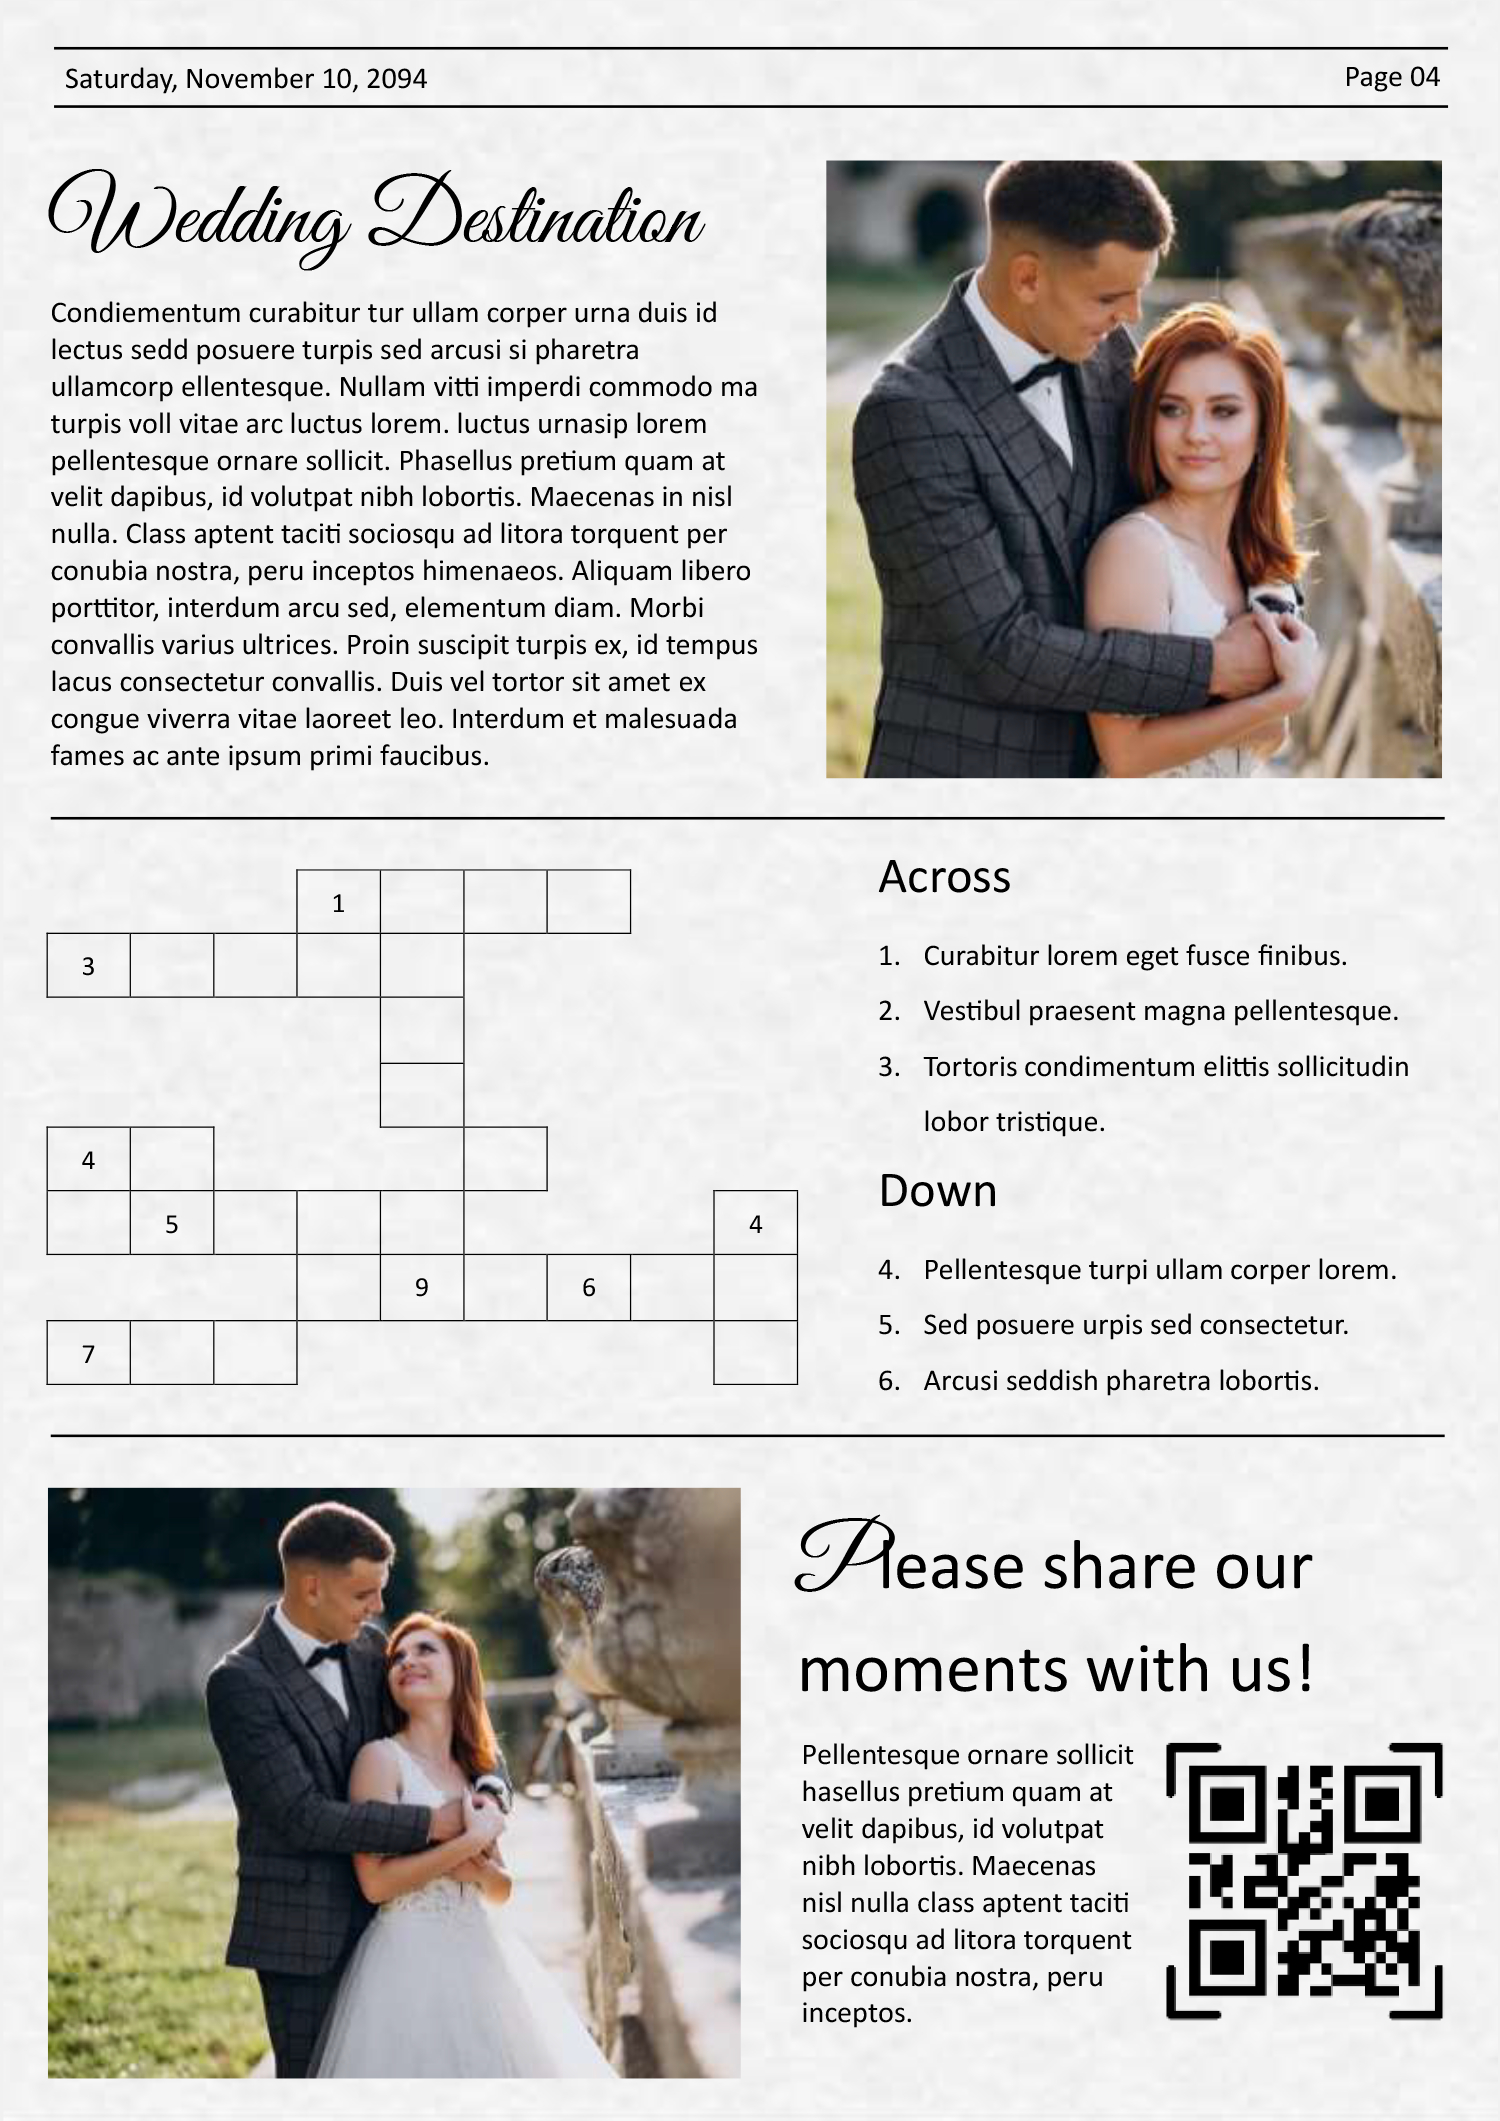 Simple Wedding Program Newspaper Template - Page 04